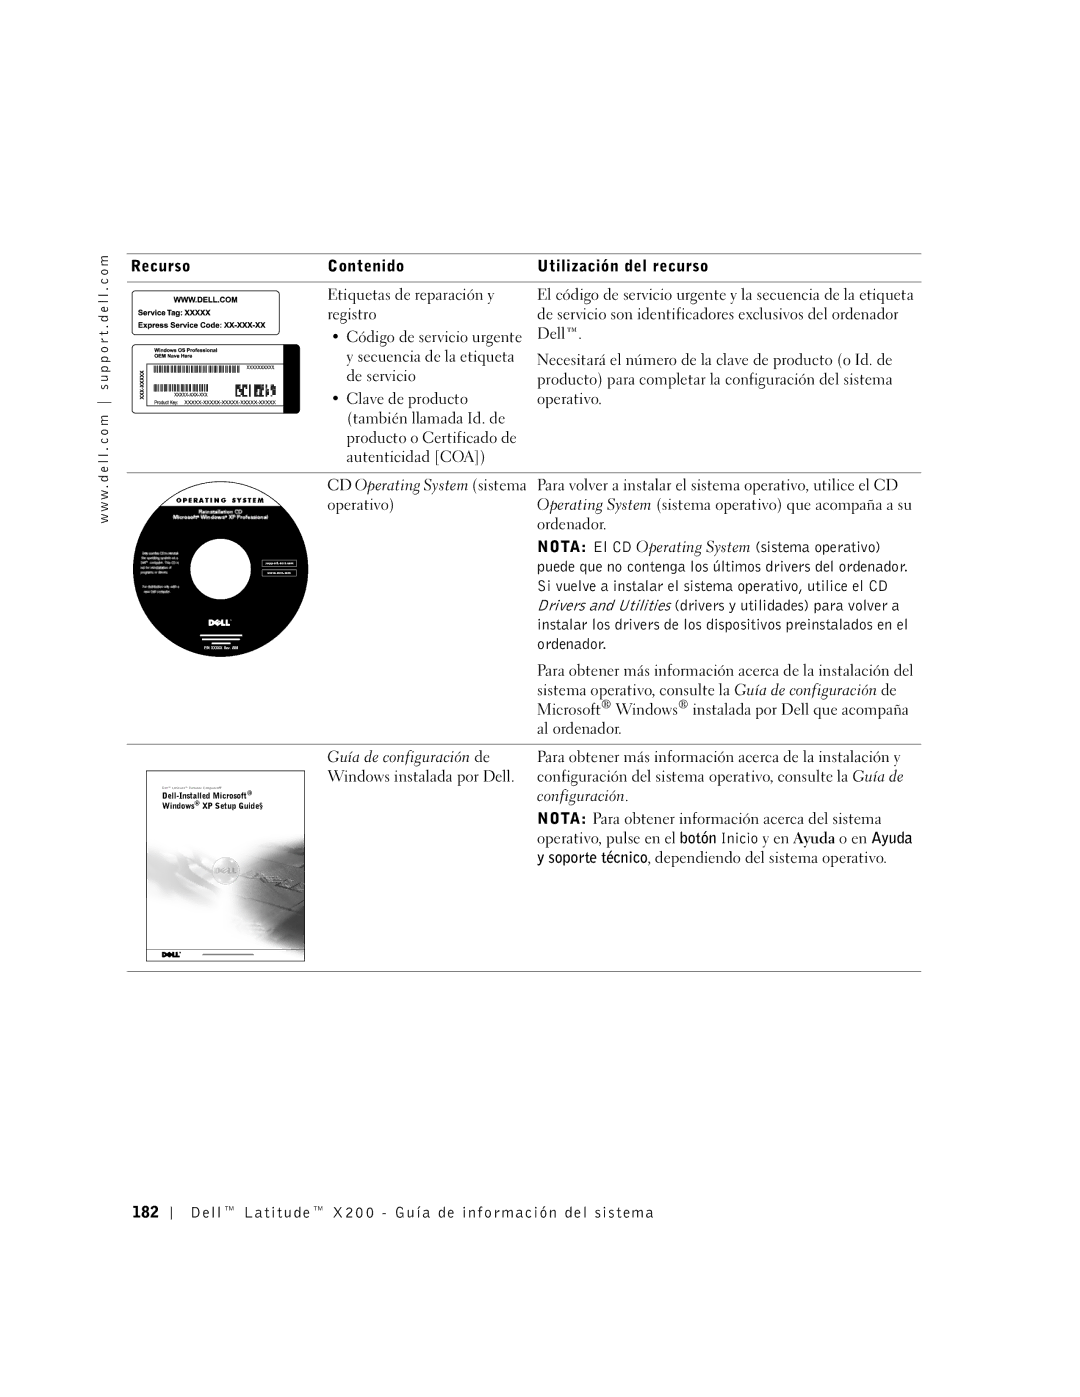 LeapFrog PP03S manual Nota El CD Operating System sistema operativo, Ordenador 